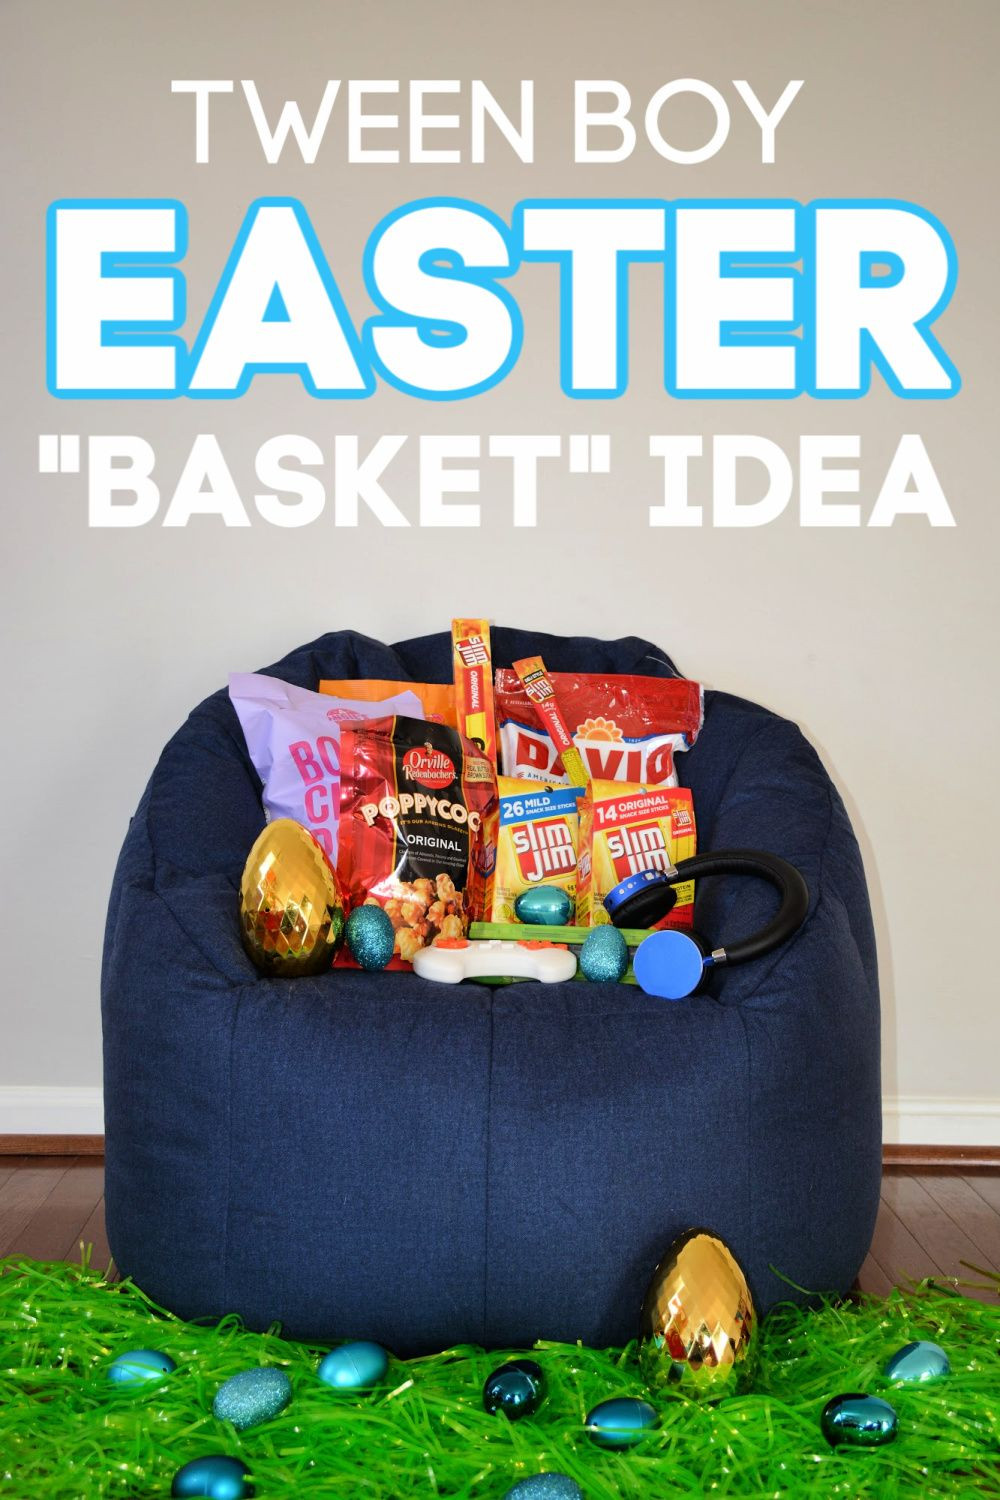 Easter Basket Ideas For 9 Year Old Boy
 Tween Boy Easter "Basket" Idea